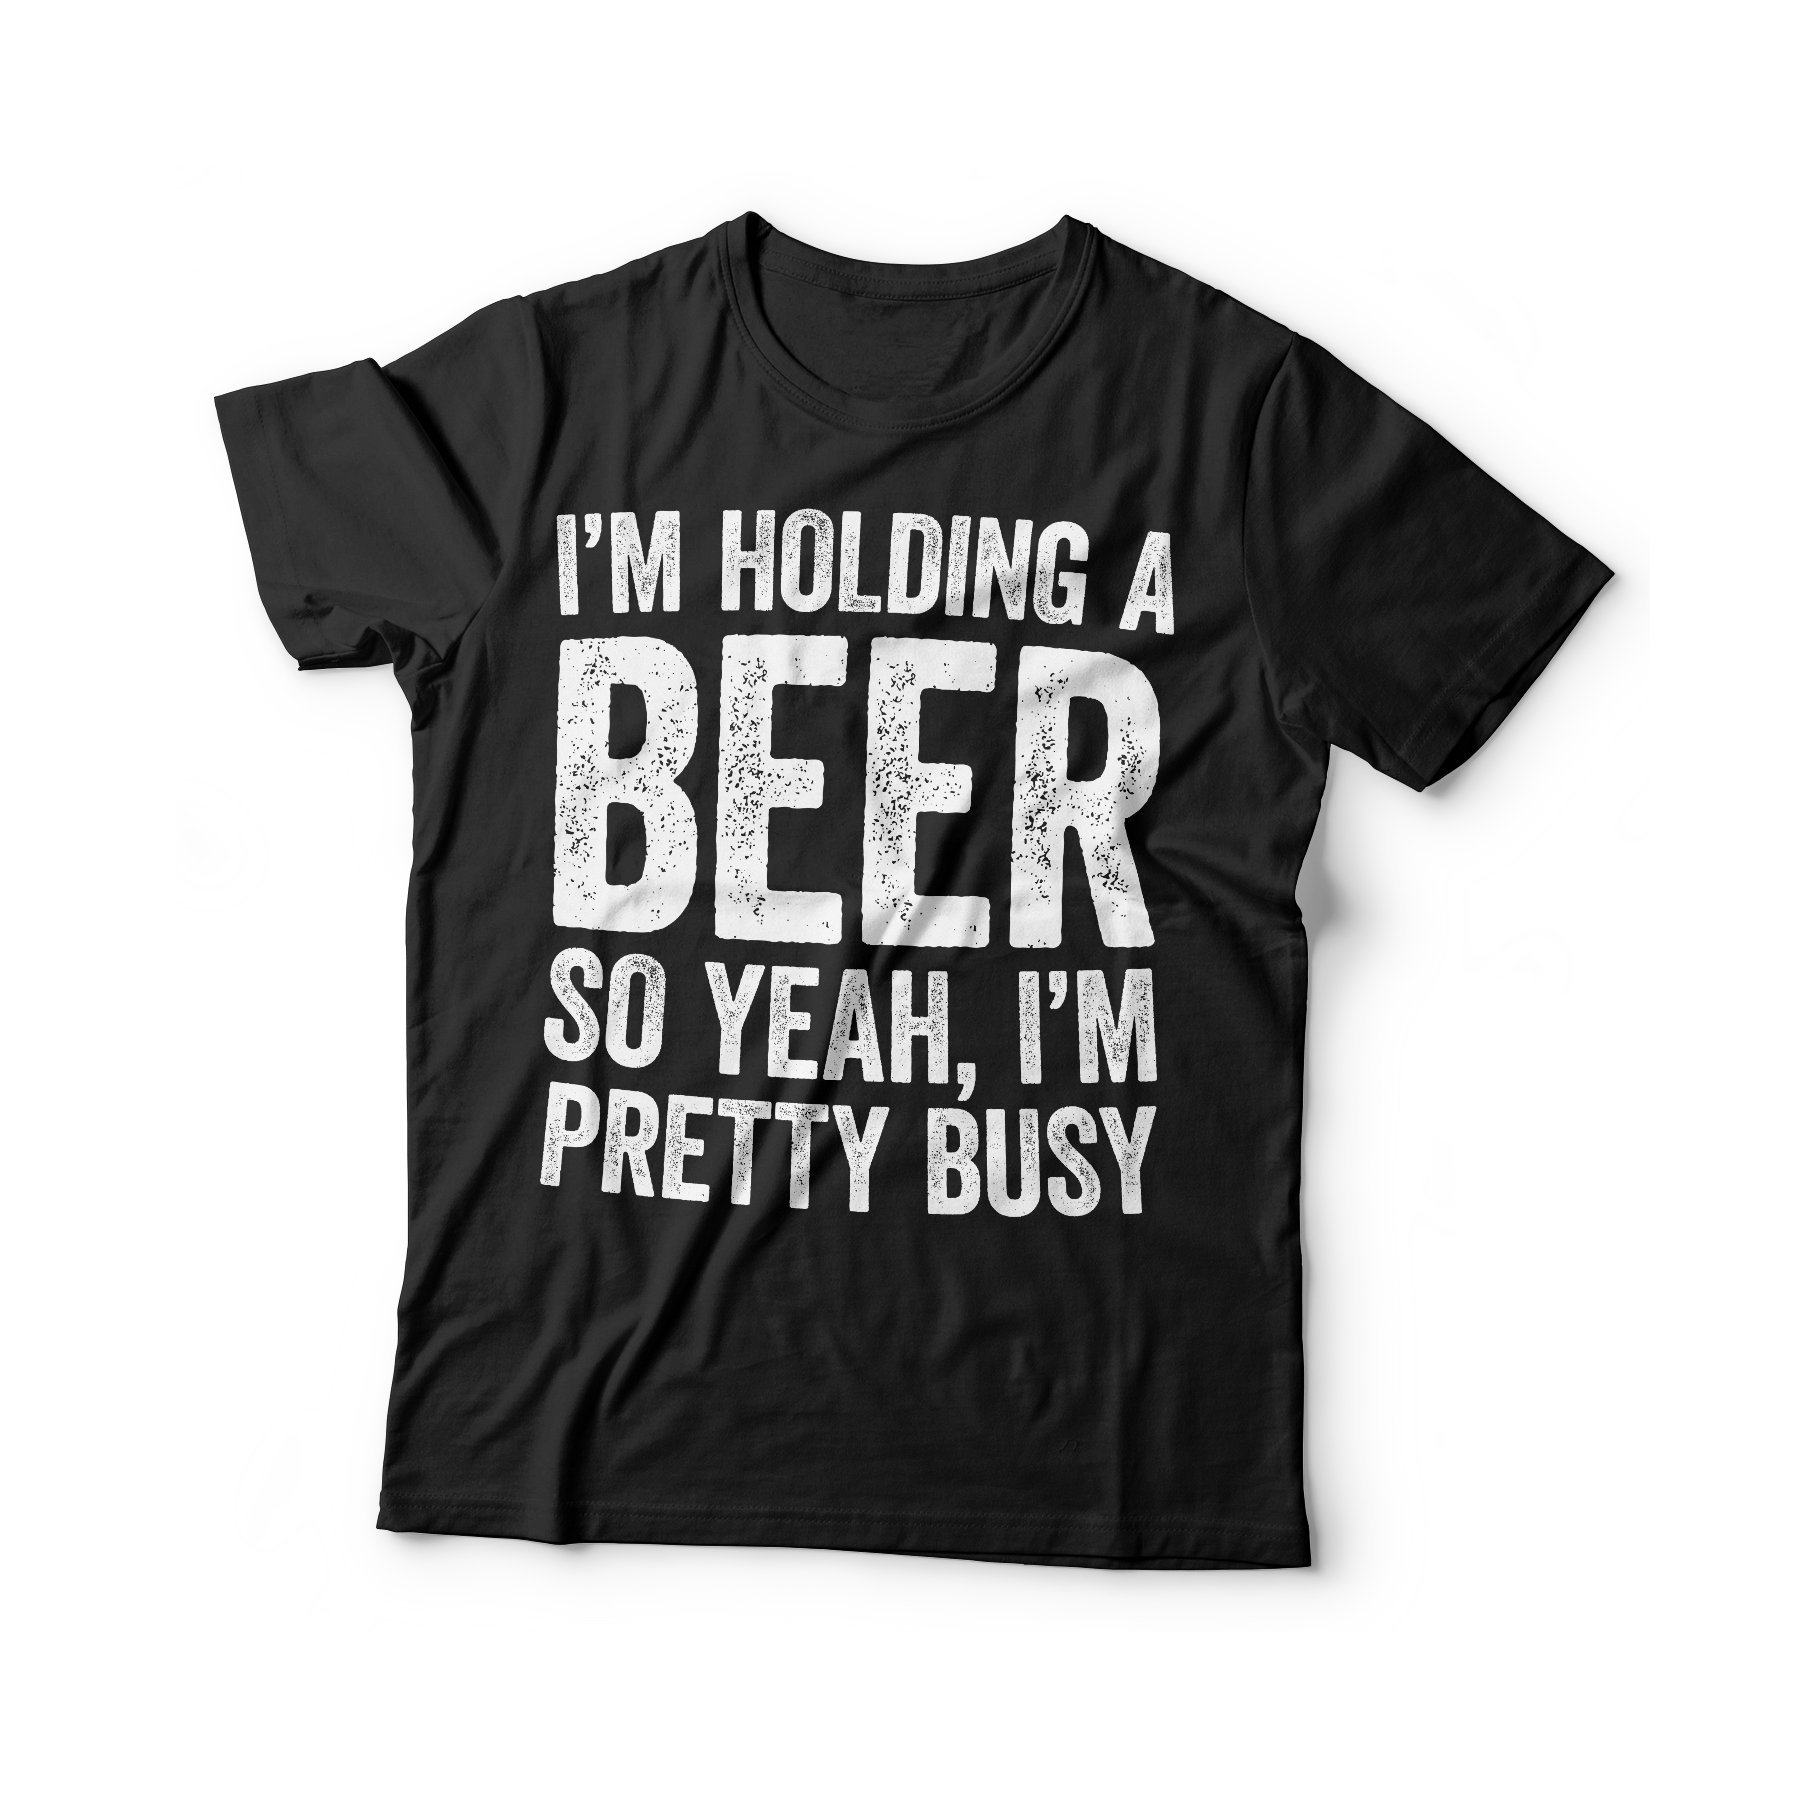 I'm Holding A Beer So Yeah I'm Pretty Busy Shirt Shirt Unisex Tee Shirts Short Sleeve Women Men Tank